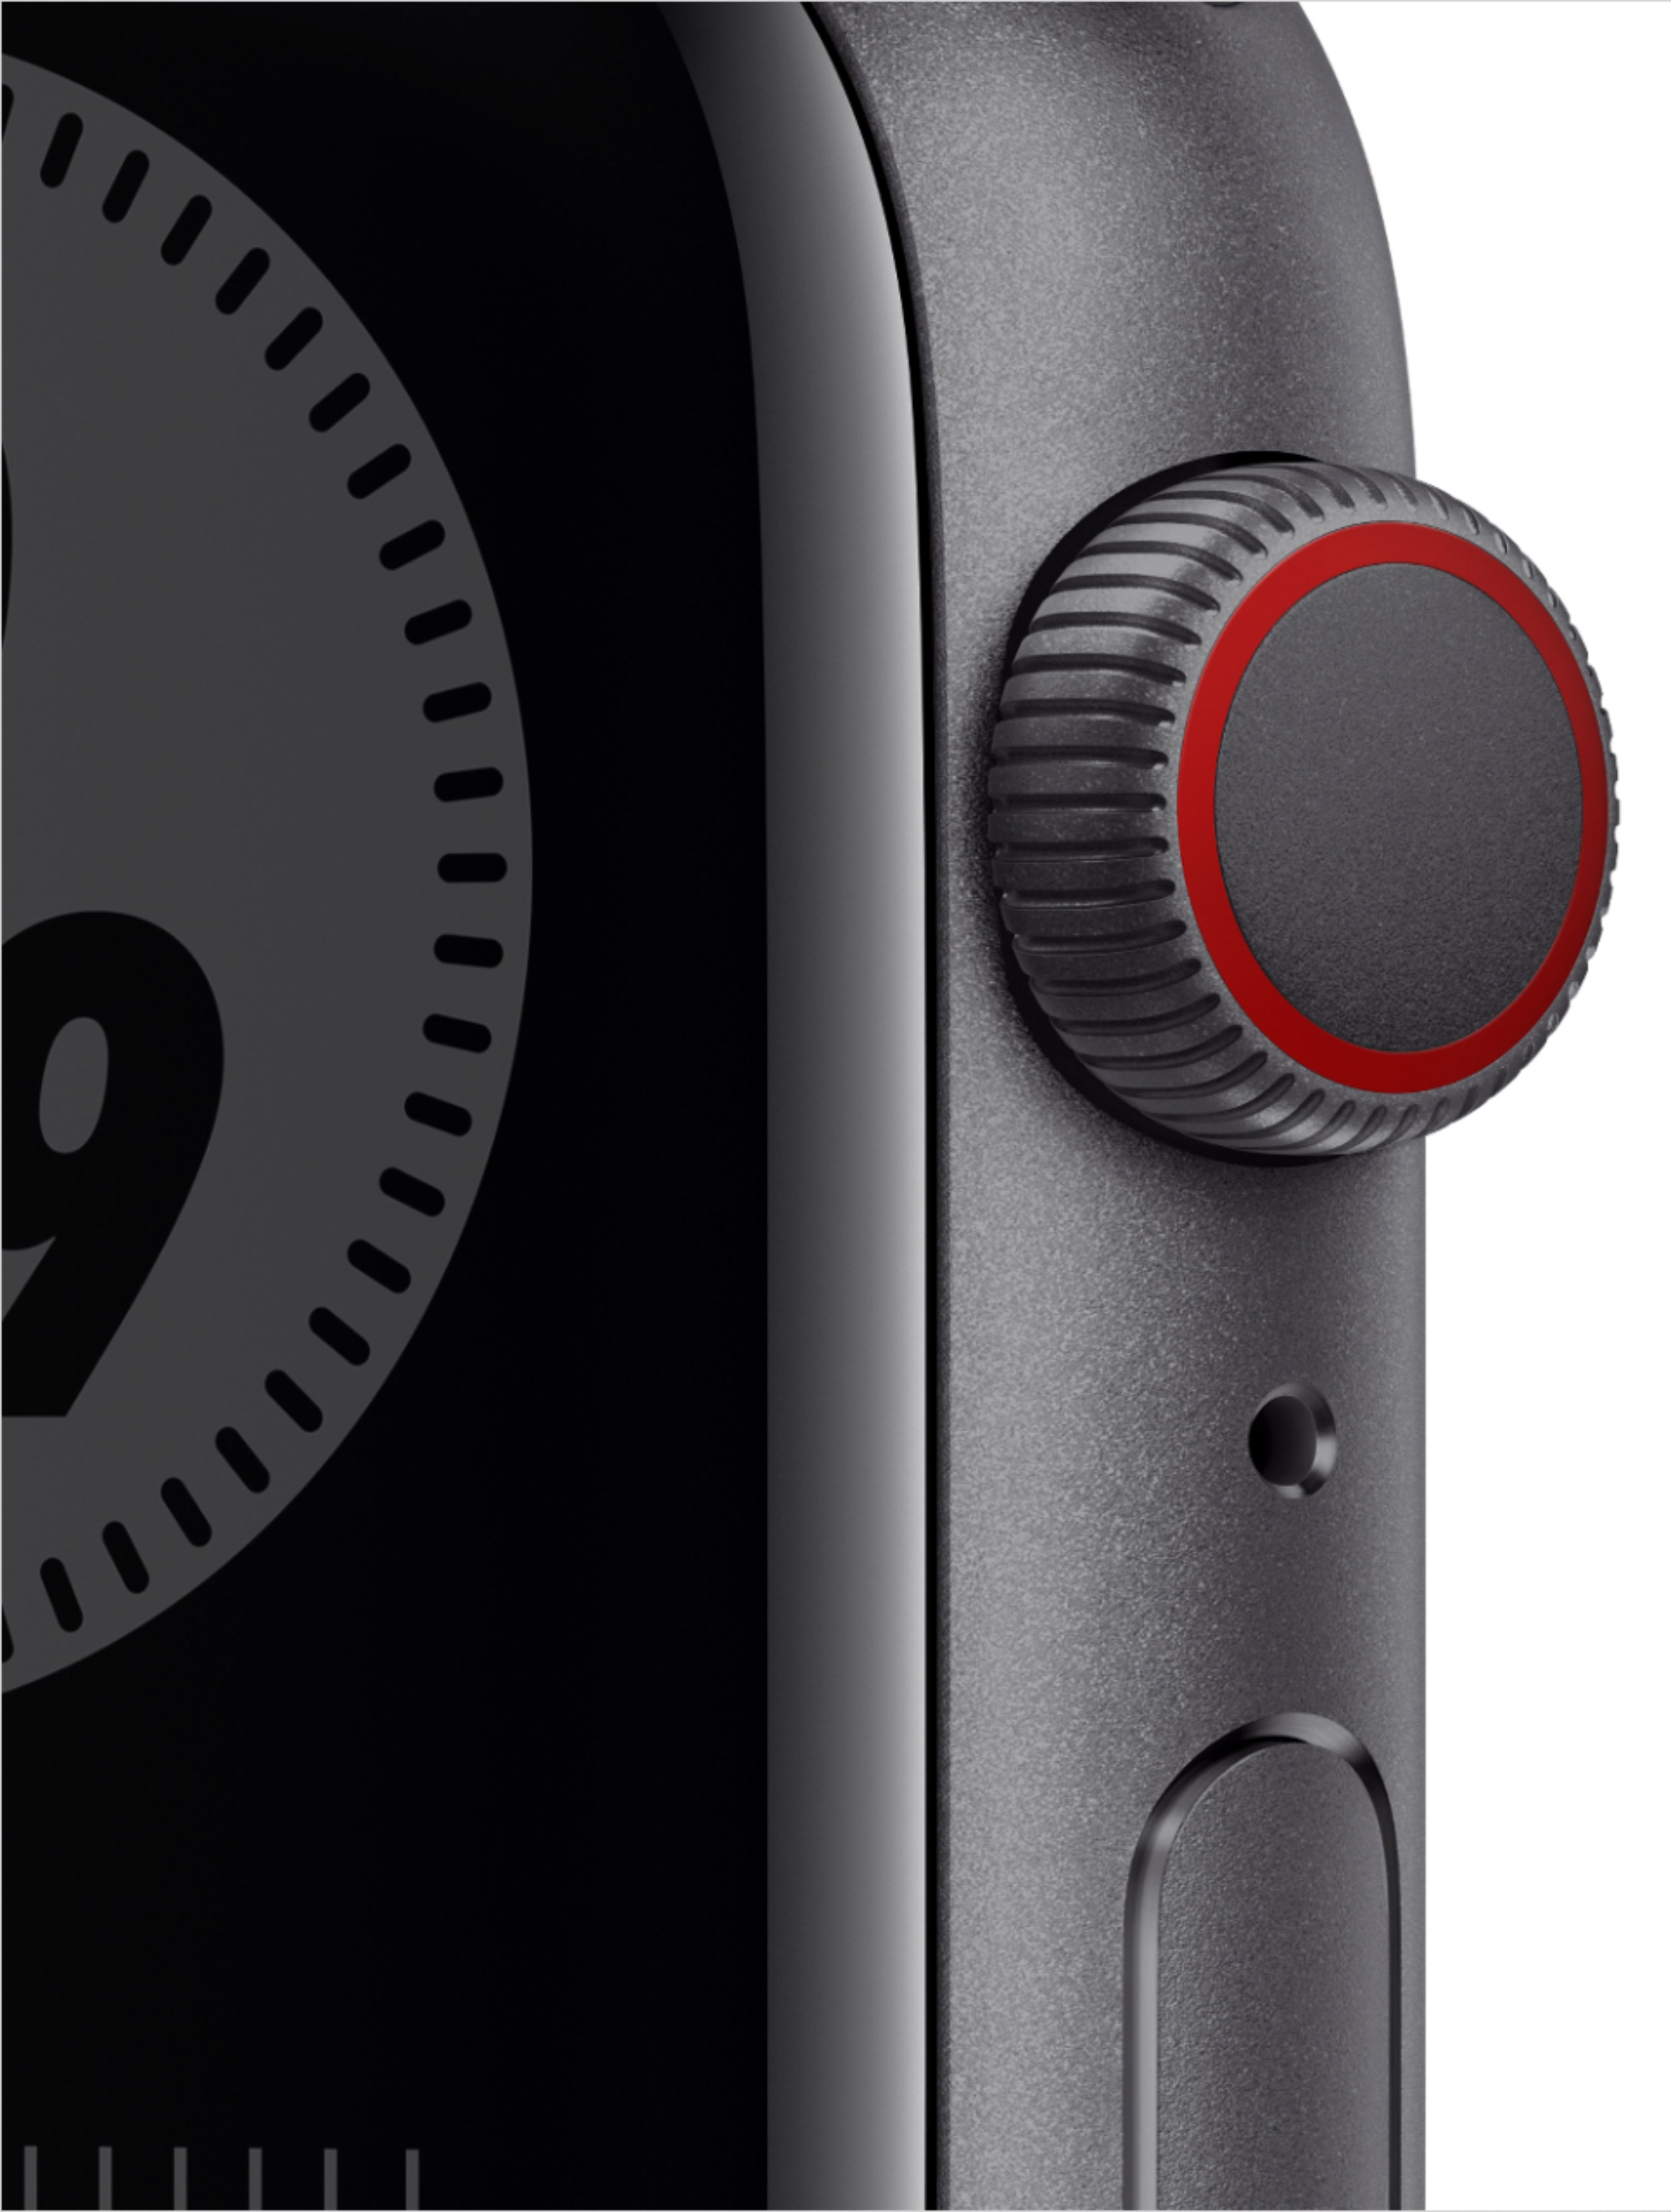 Applewatch4 44mm NIKE GPS その他 スマートフォン/携帯電話 家電・スマホ・カメラ 人気ファッションまとめランキング